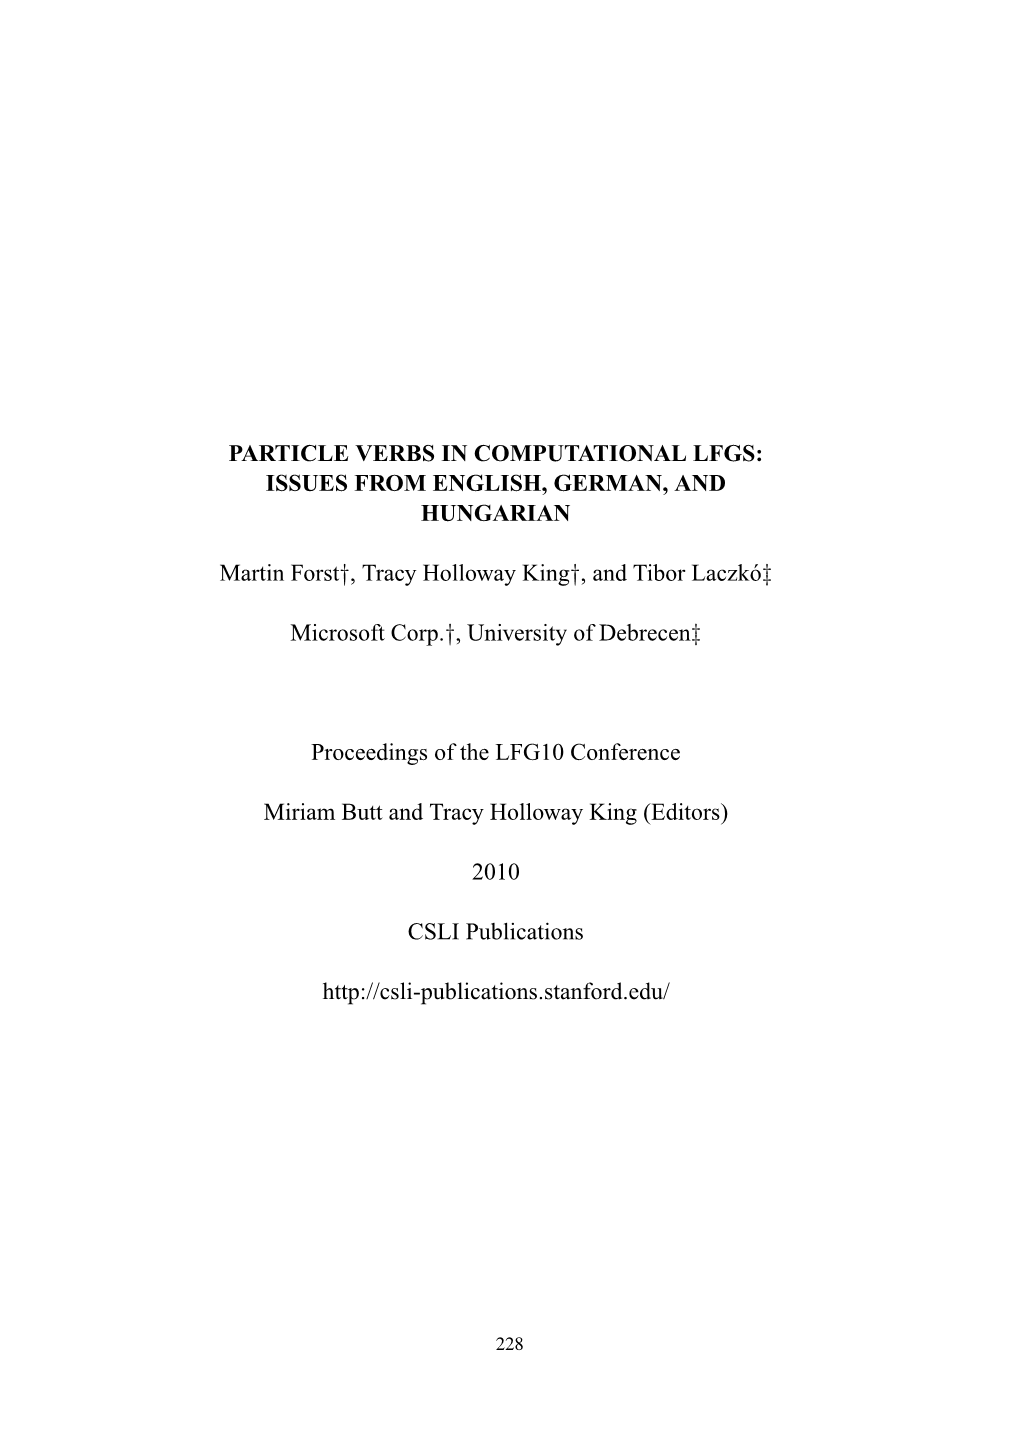 Proceedings of LFG10